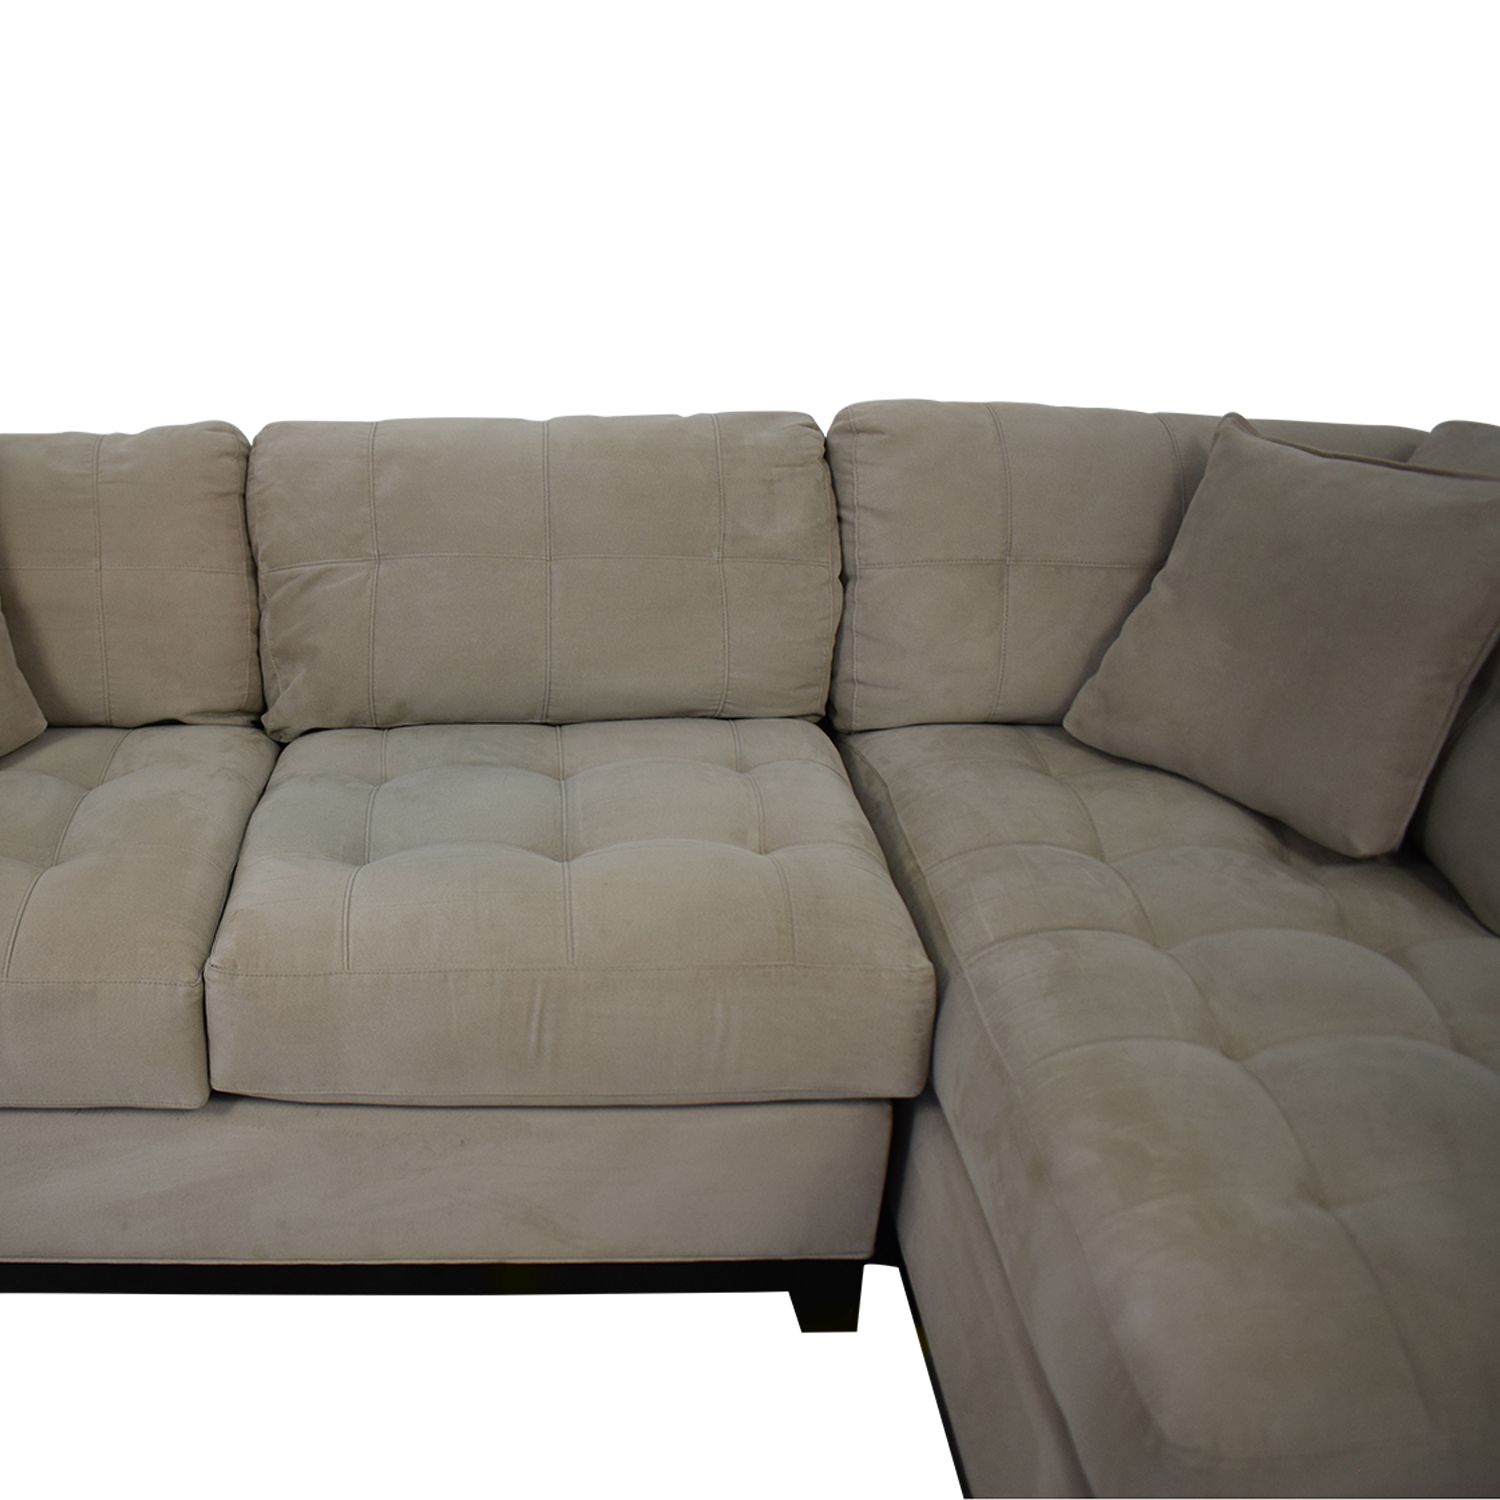 Cindy Crawford Home Metropolis Microfiber Sectional Sofa | Baci Living Room In Microfiber Sectional Corner Sofas (View 4 of 20)